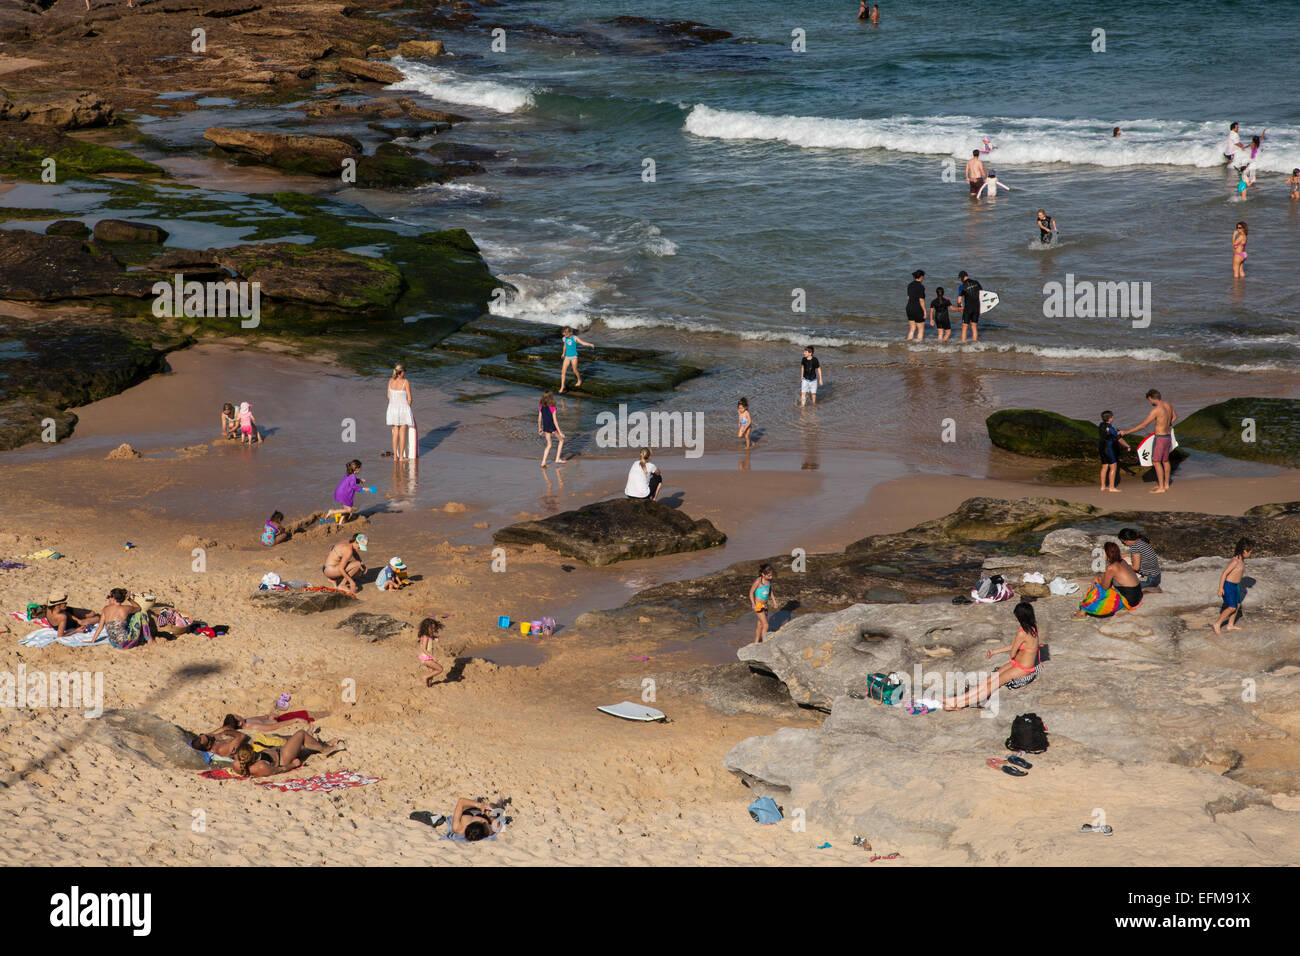 Maroubra beach, Sydney, New South Wales, Australia Stock Photo